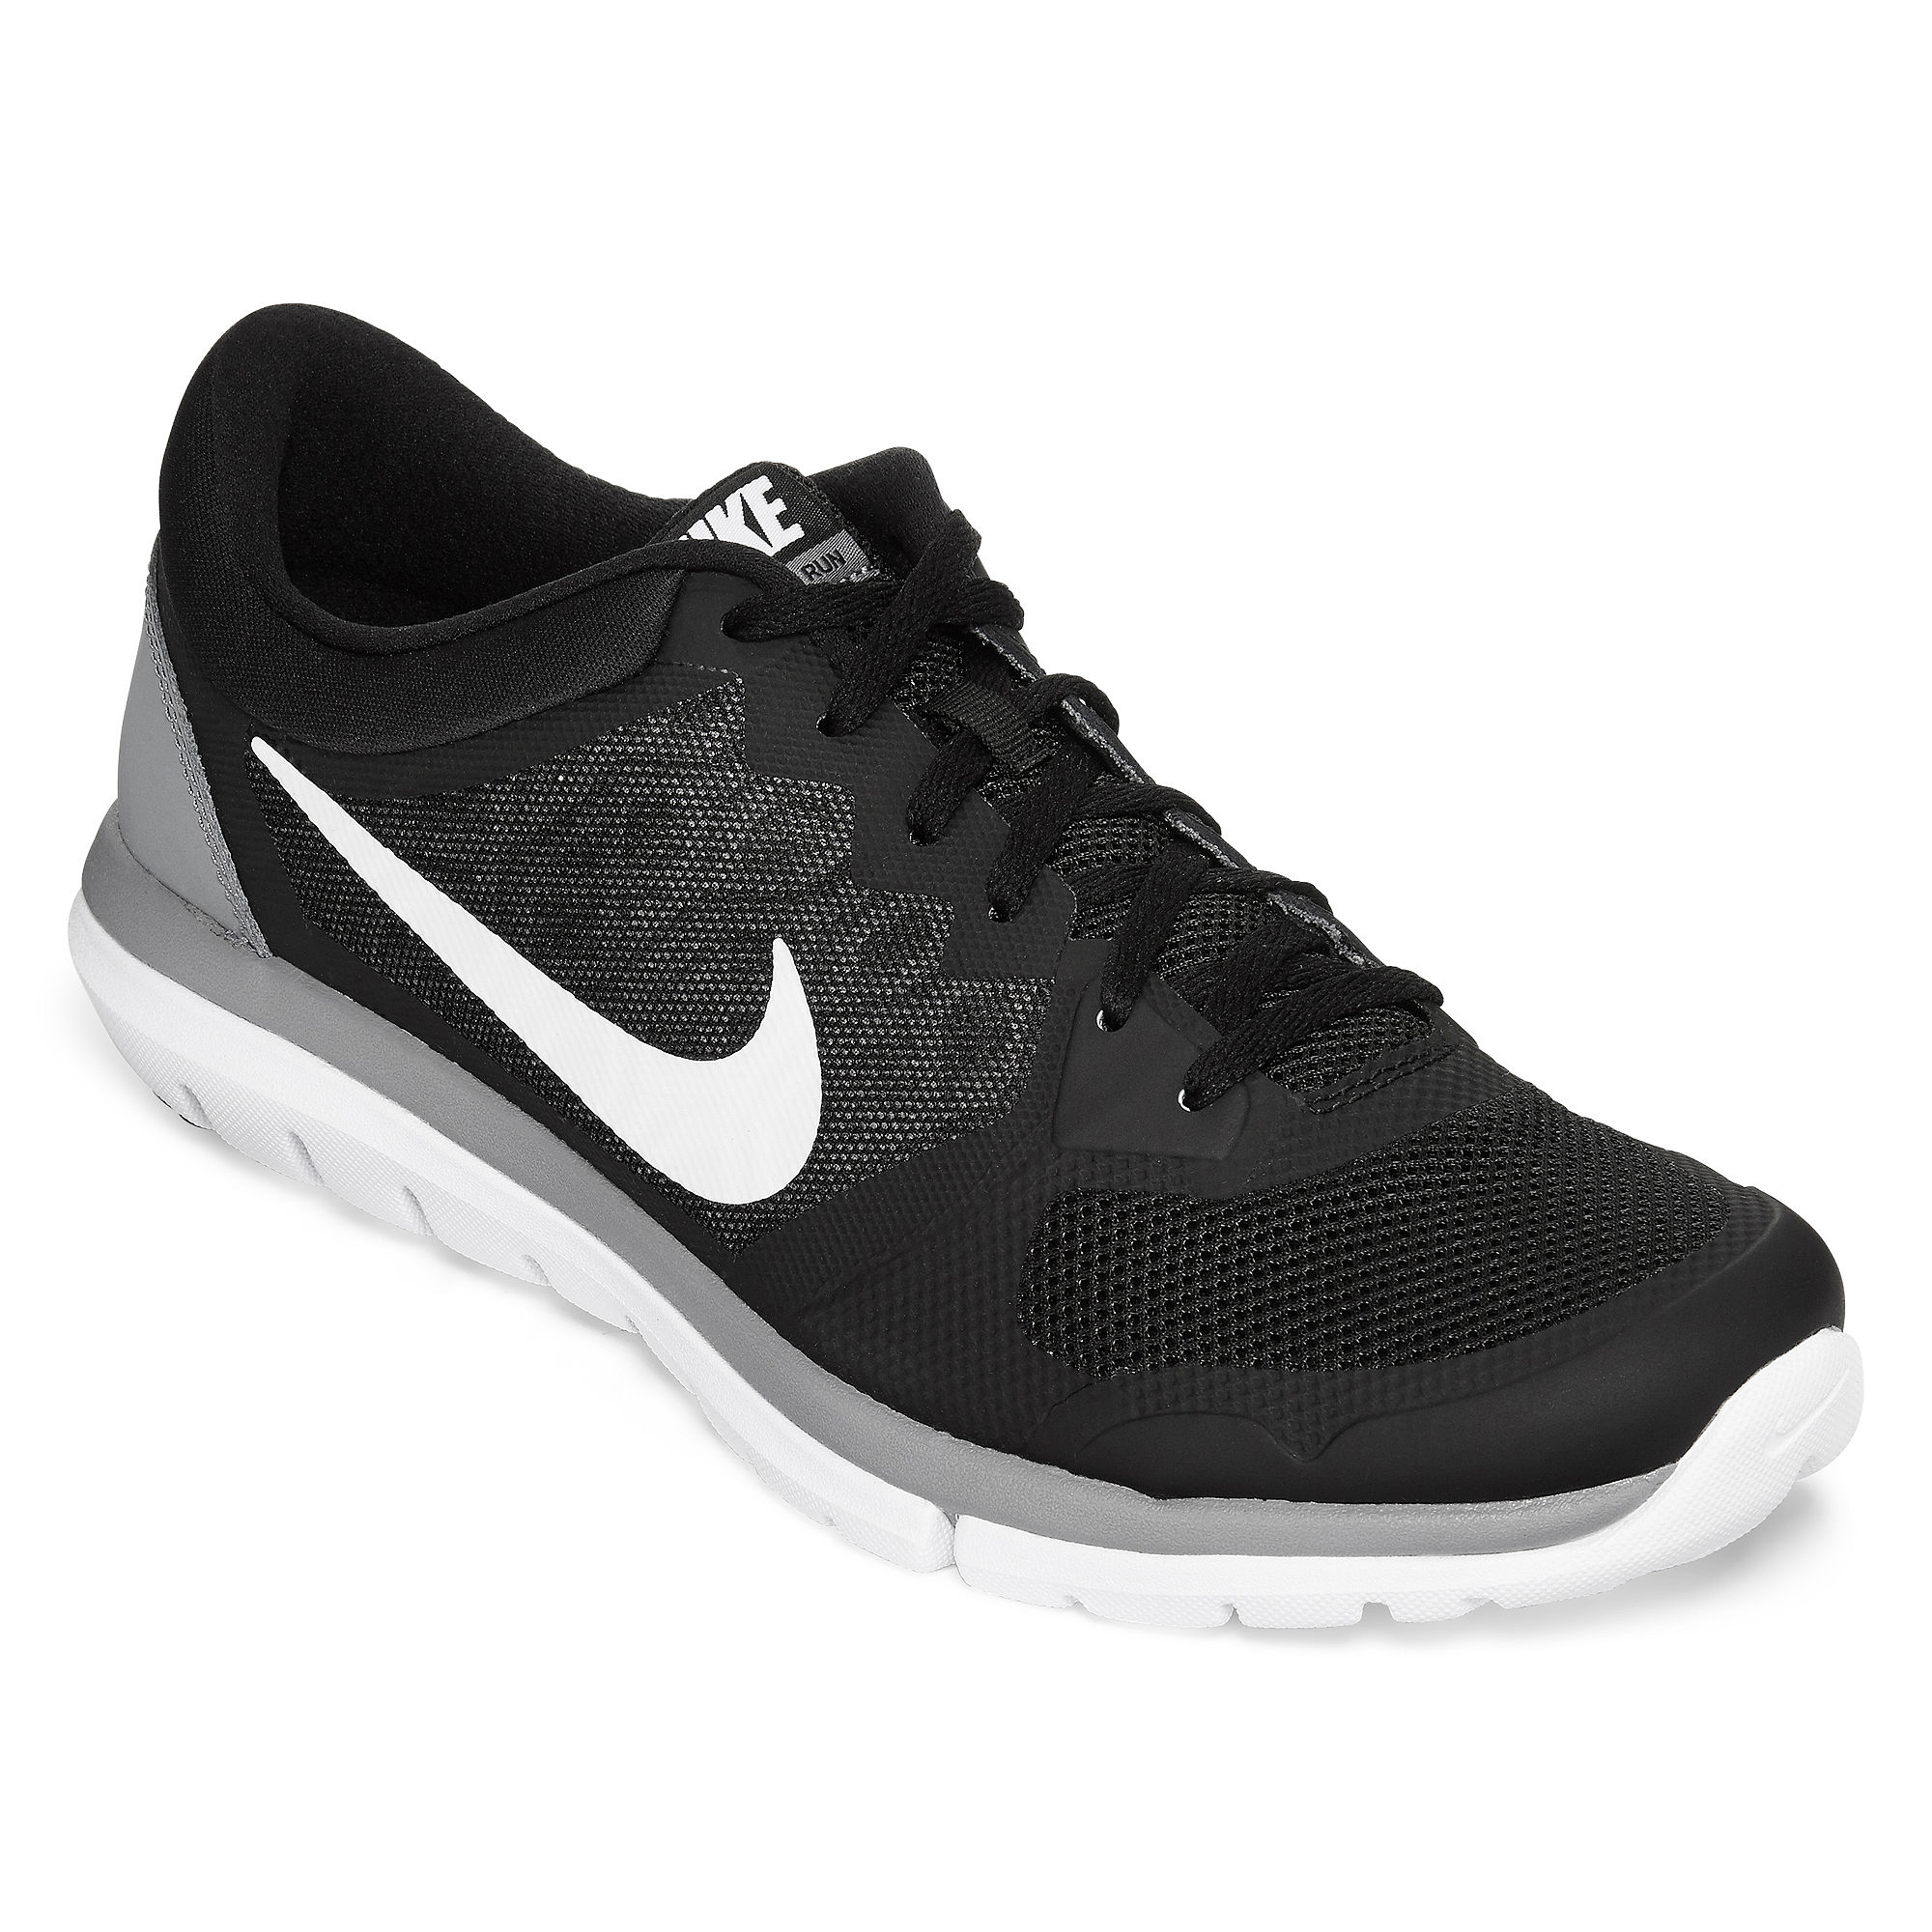 UPC 888408731609 - Nike Men's Flex Run 2015 Running Sneakers from ...